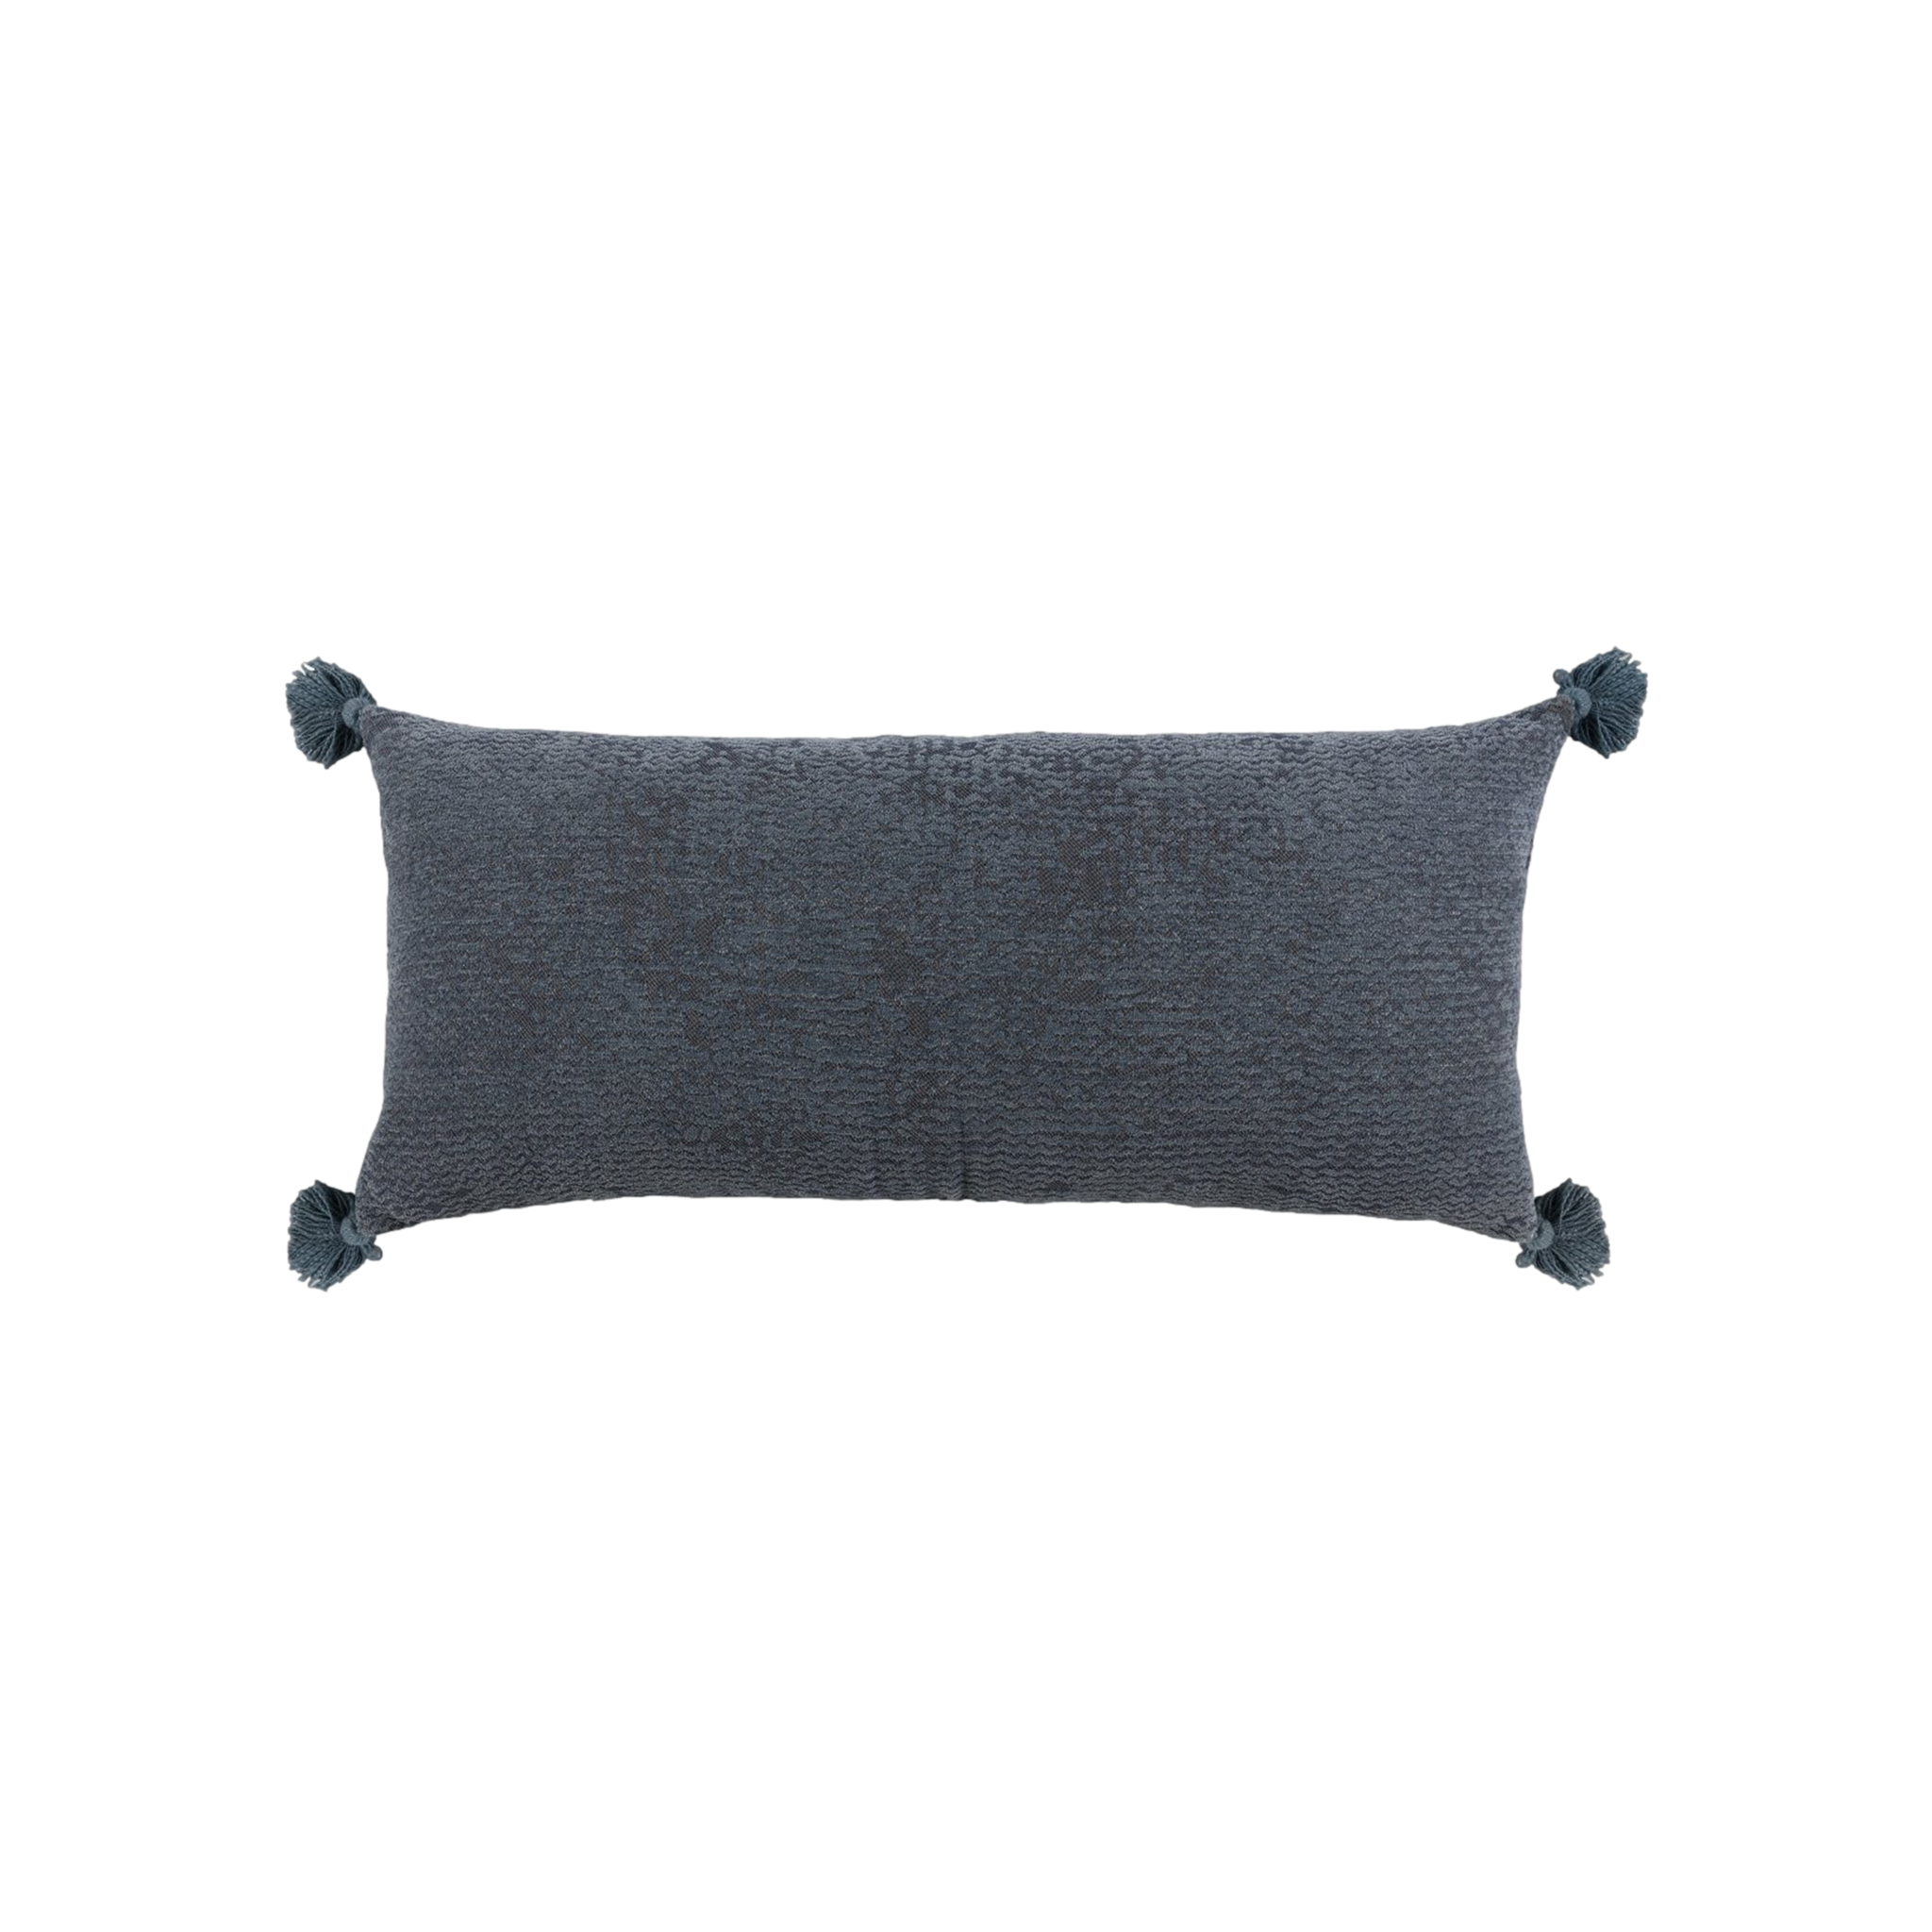 Warm Waters Pillow Bundle